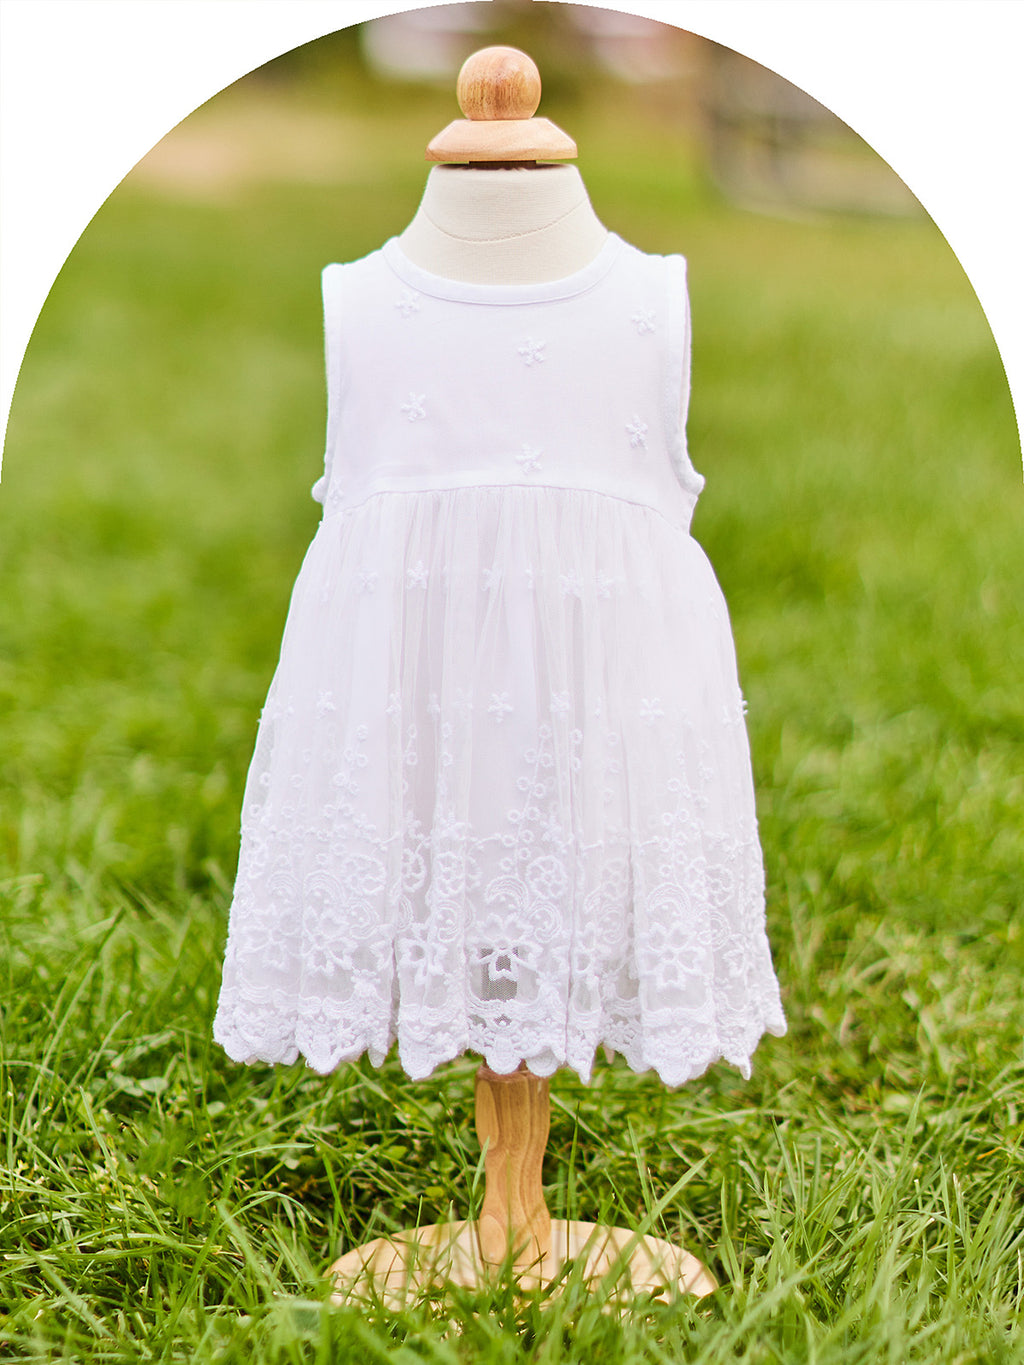 Starlight Baby Dress | April Cornell